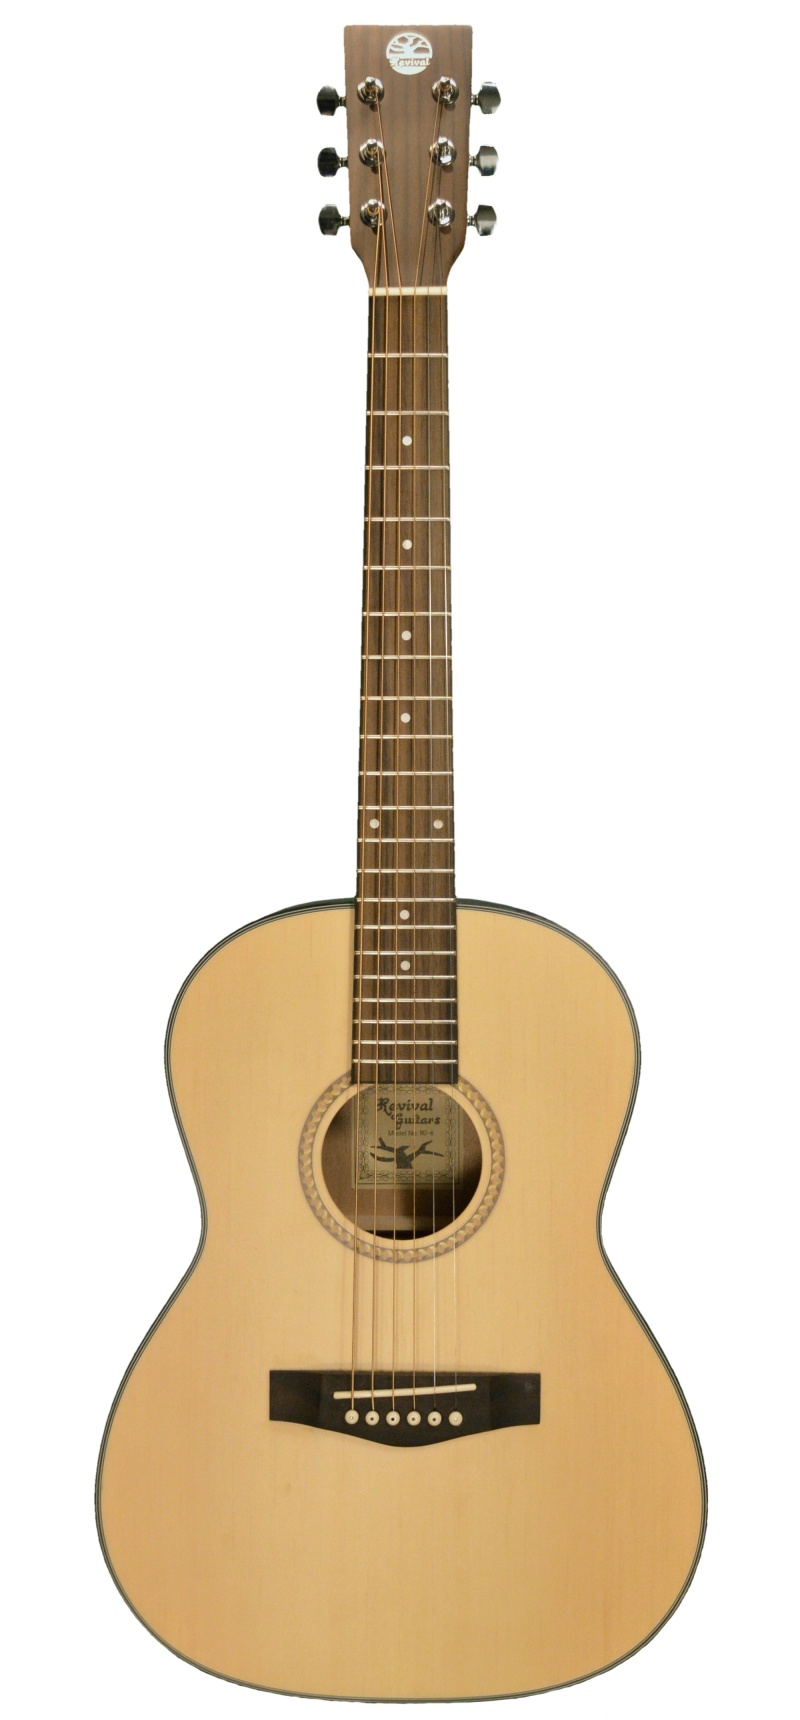 Revival Glossy Three-Quarter Size Mahogany Dreadnought Guitar